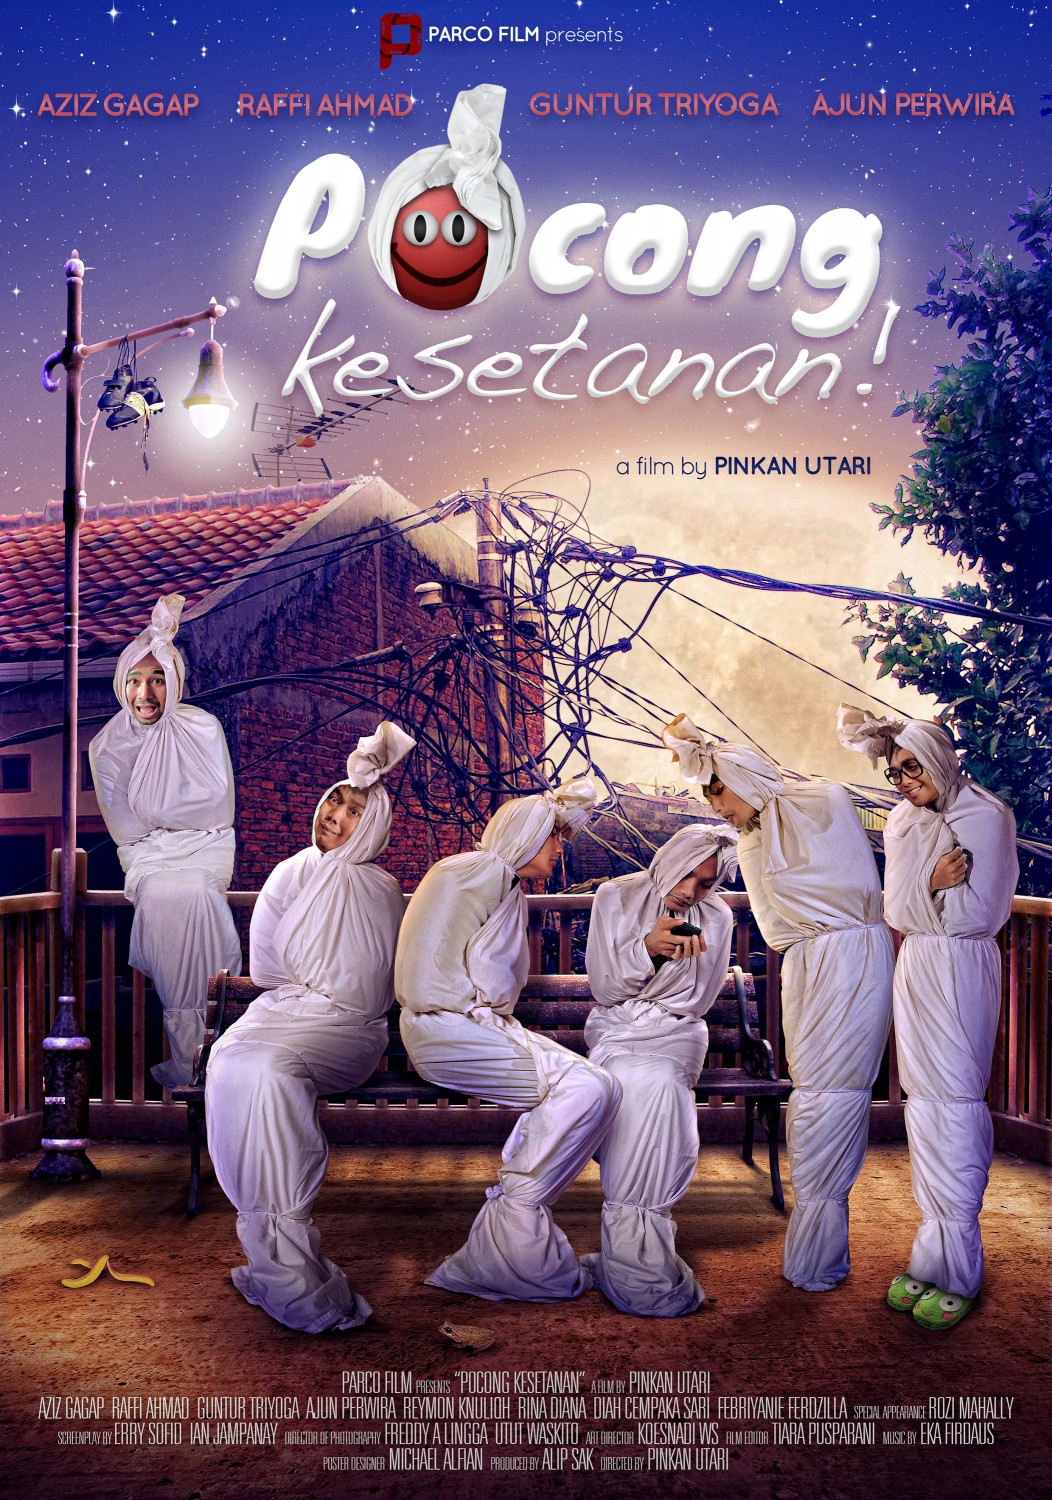 Extra Large Movie Poster Image for Pocong kesetanan! 